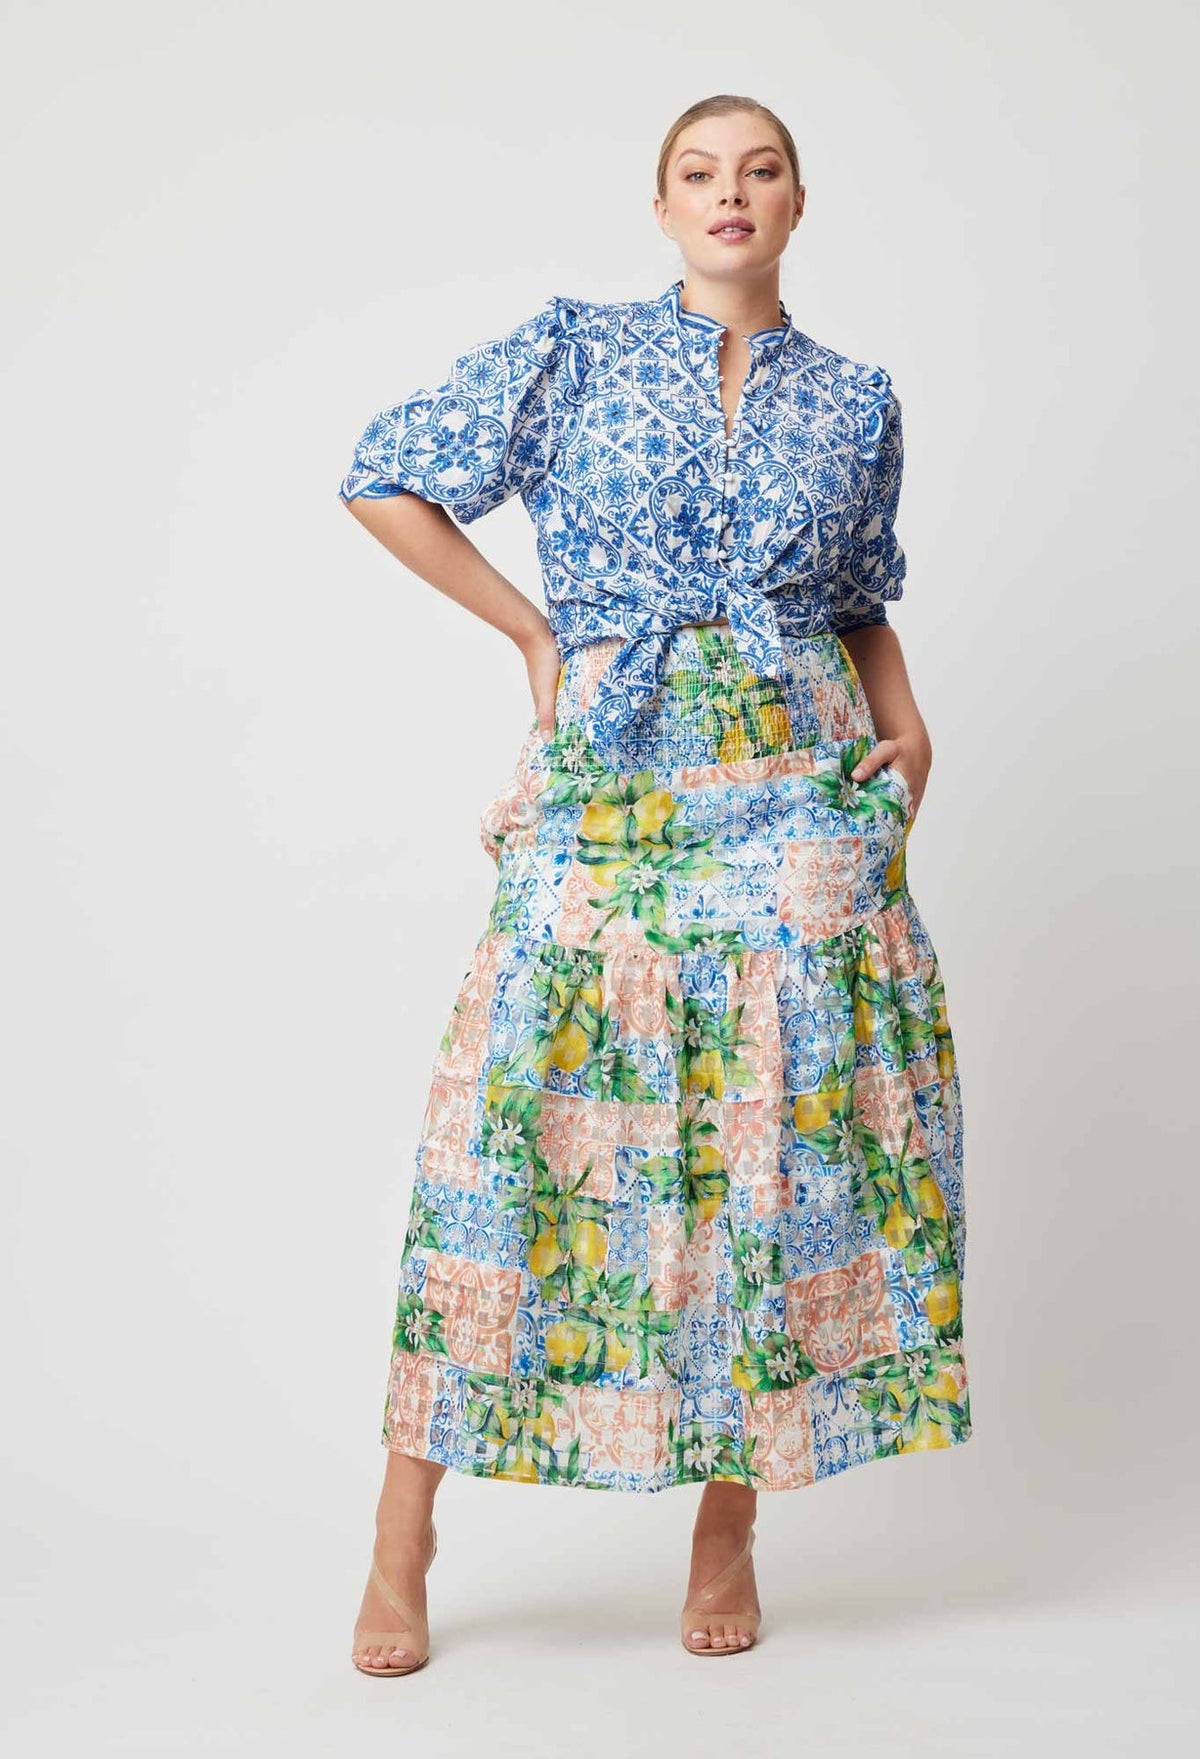 Antigua Cotton Silk Skirt in Limonata